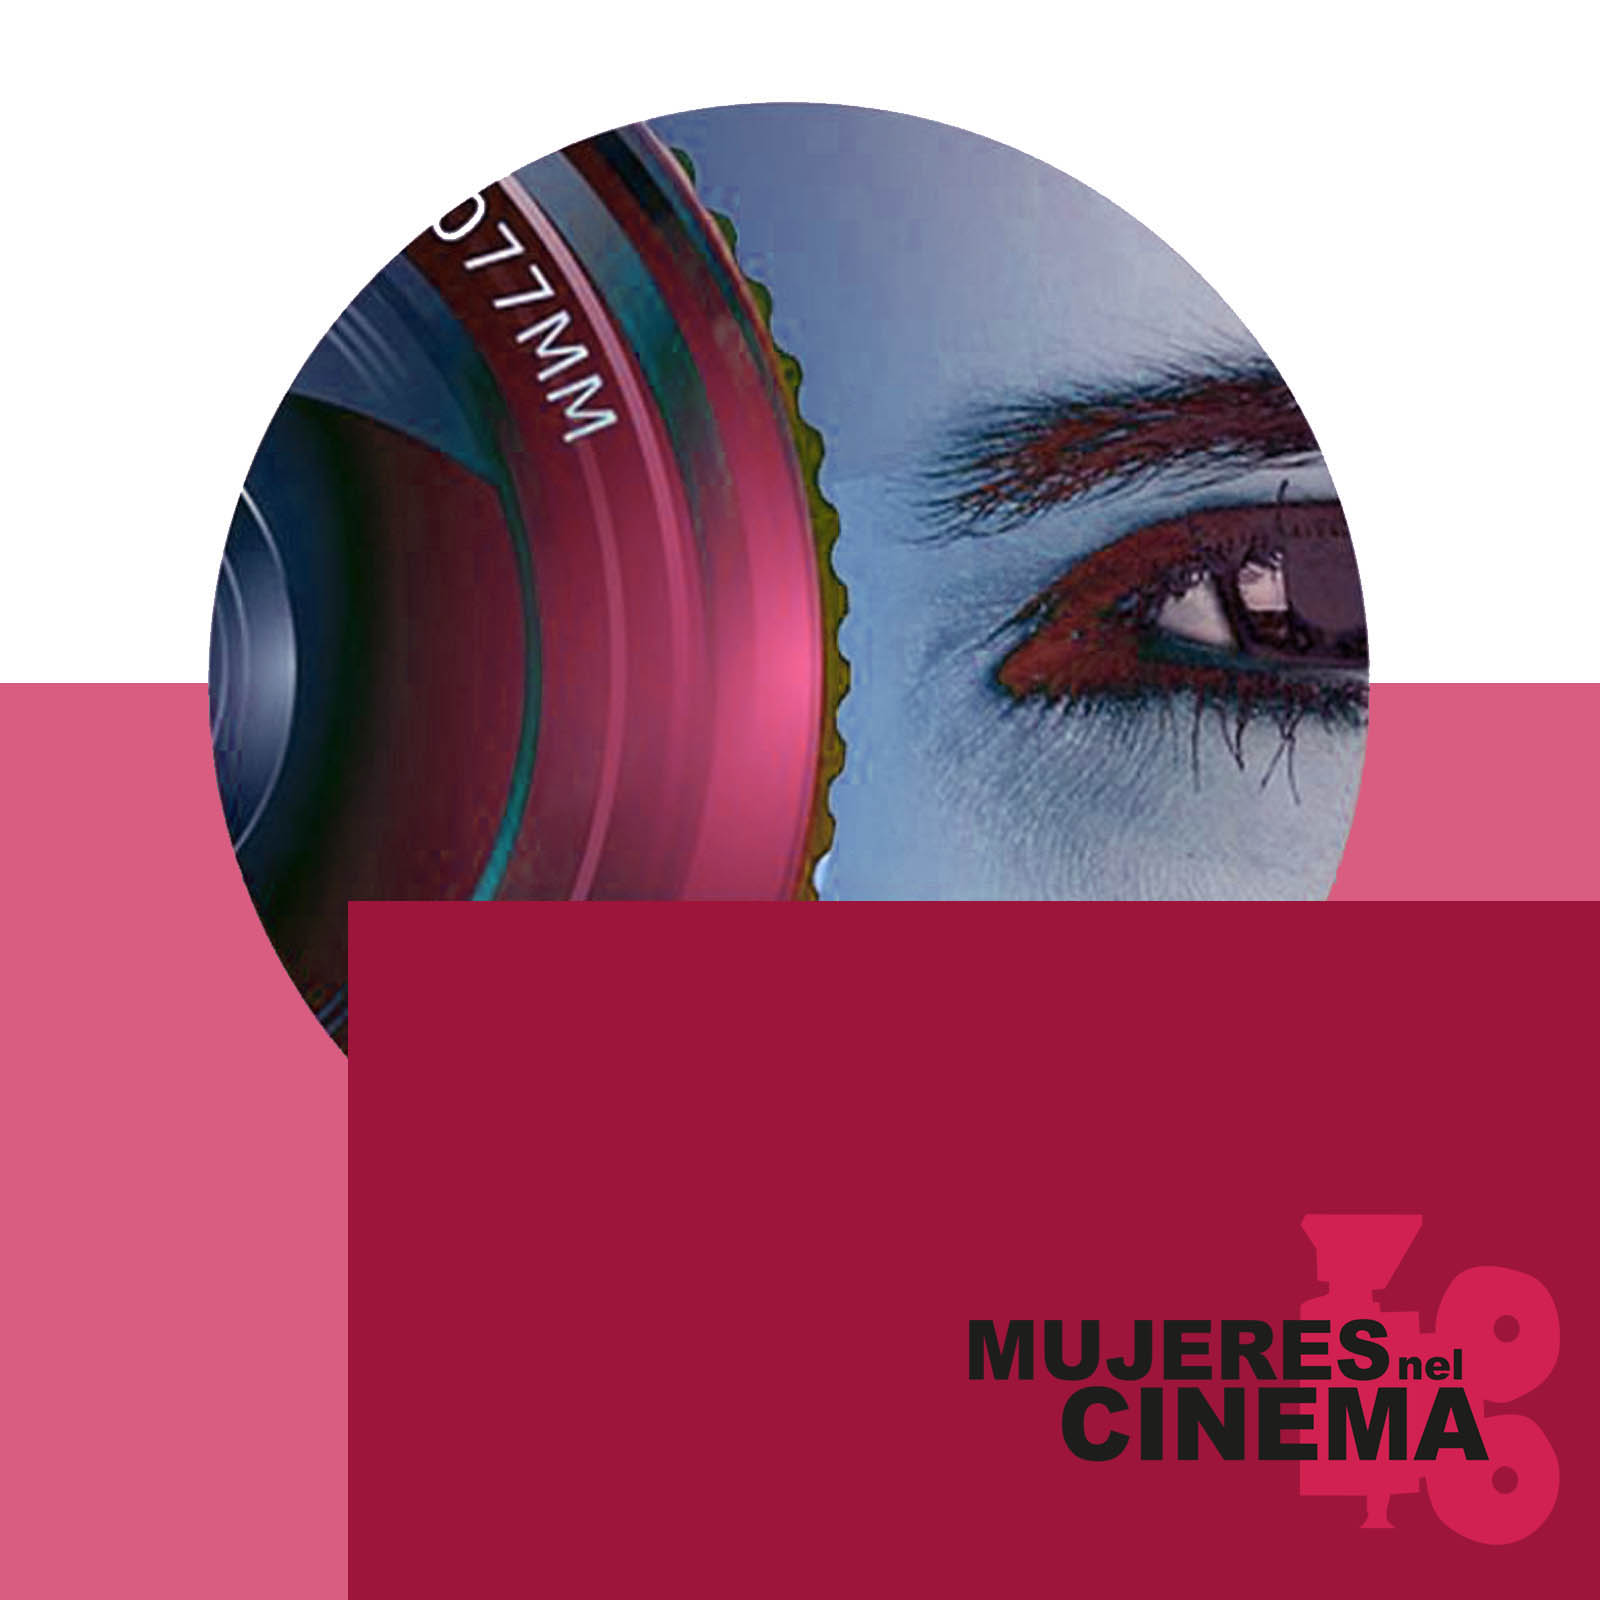 Mujeres nel Cinema ad Officina